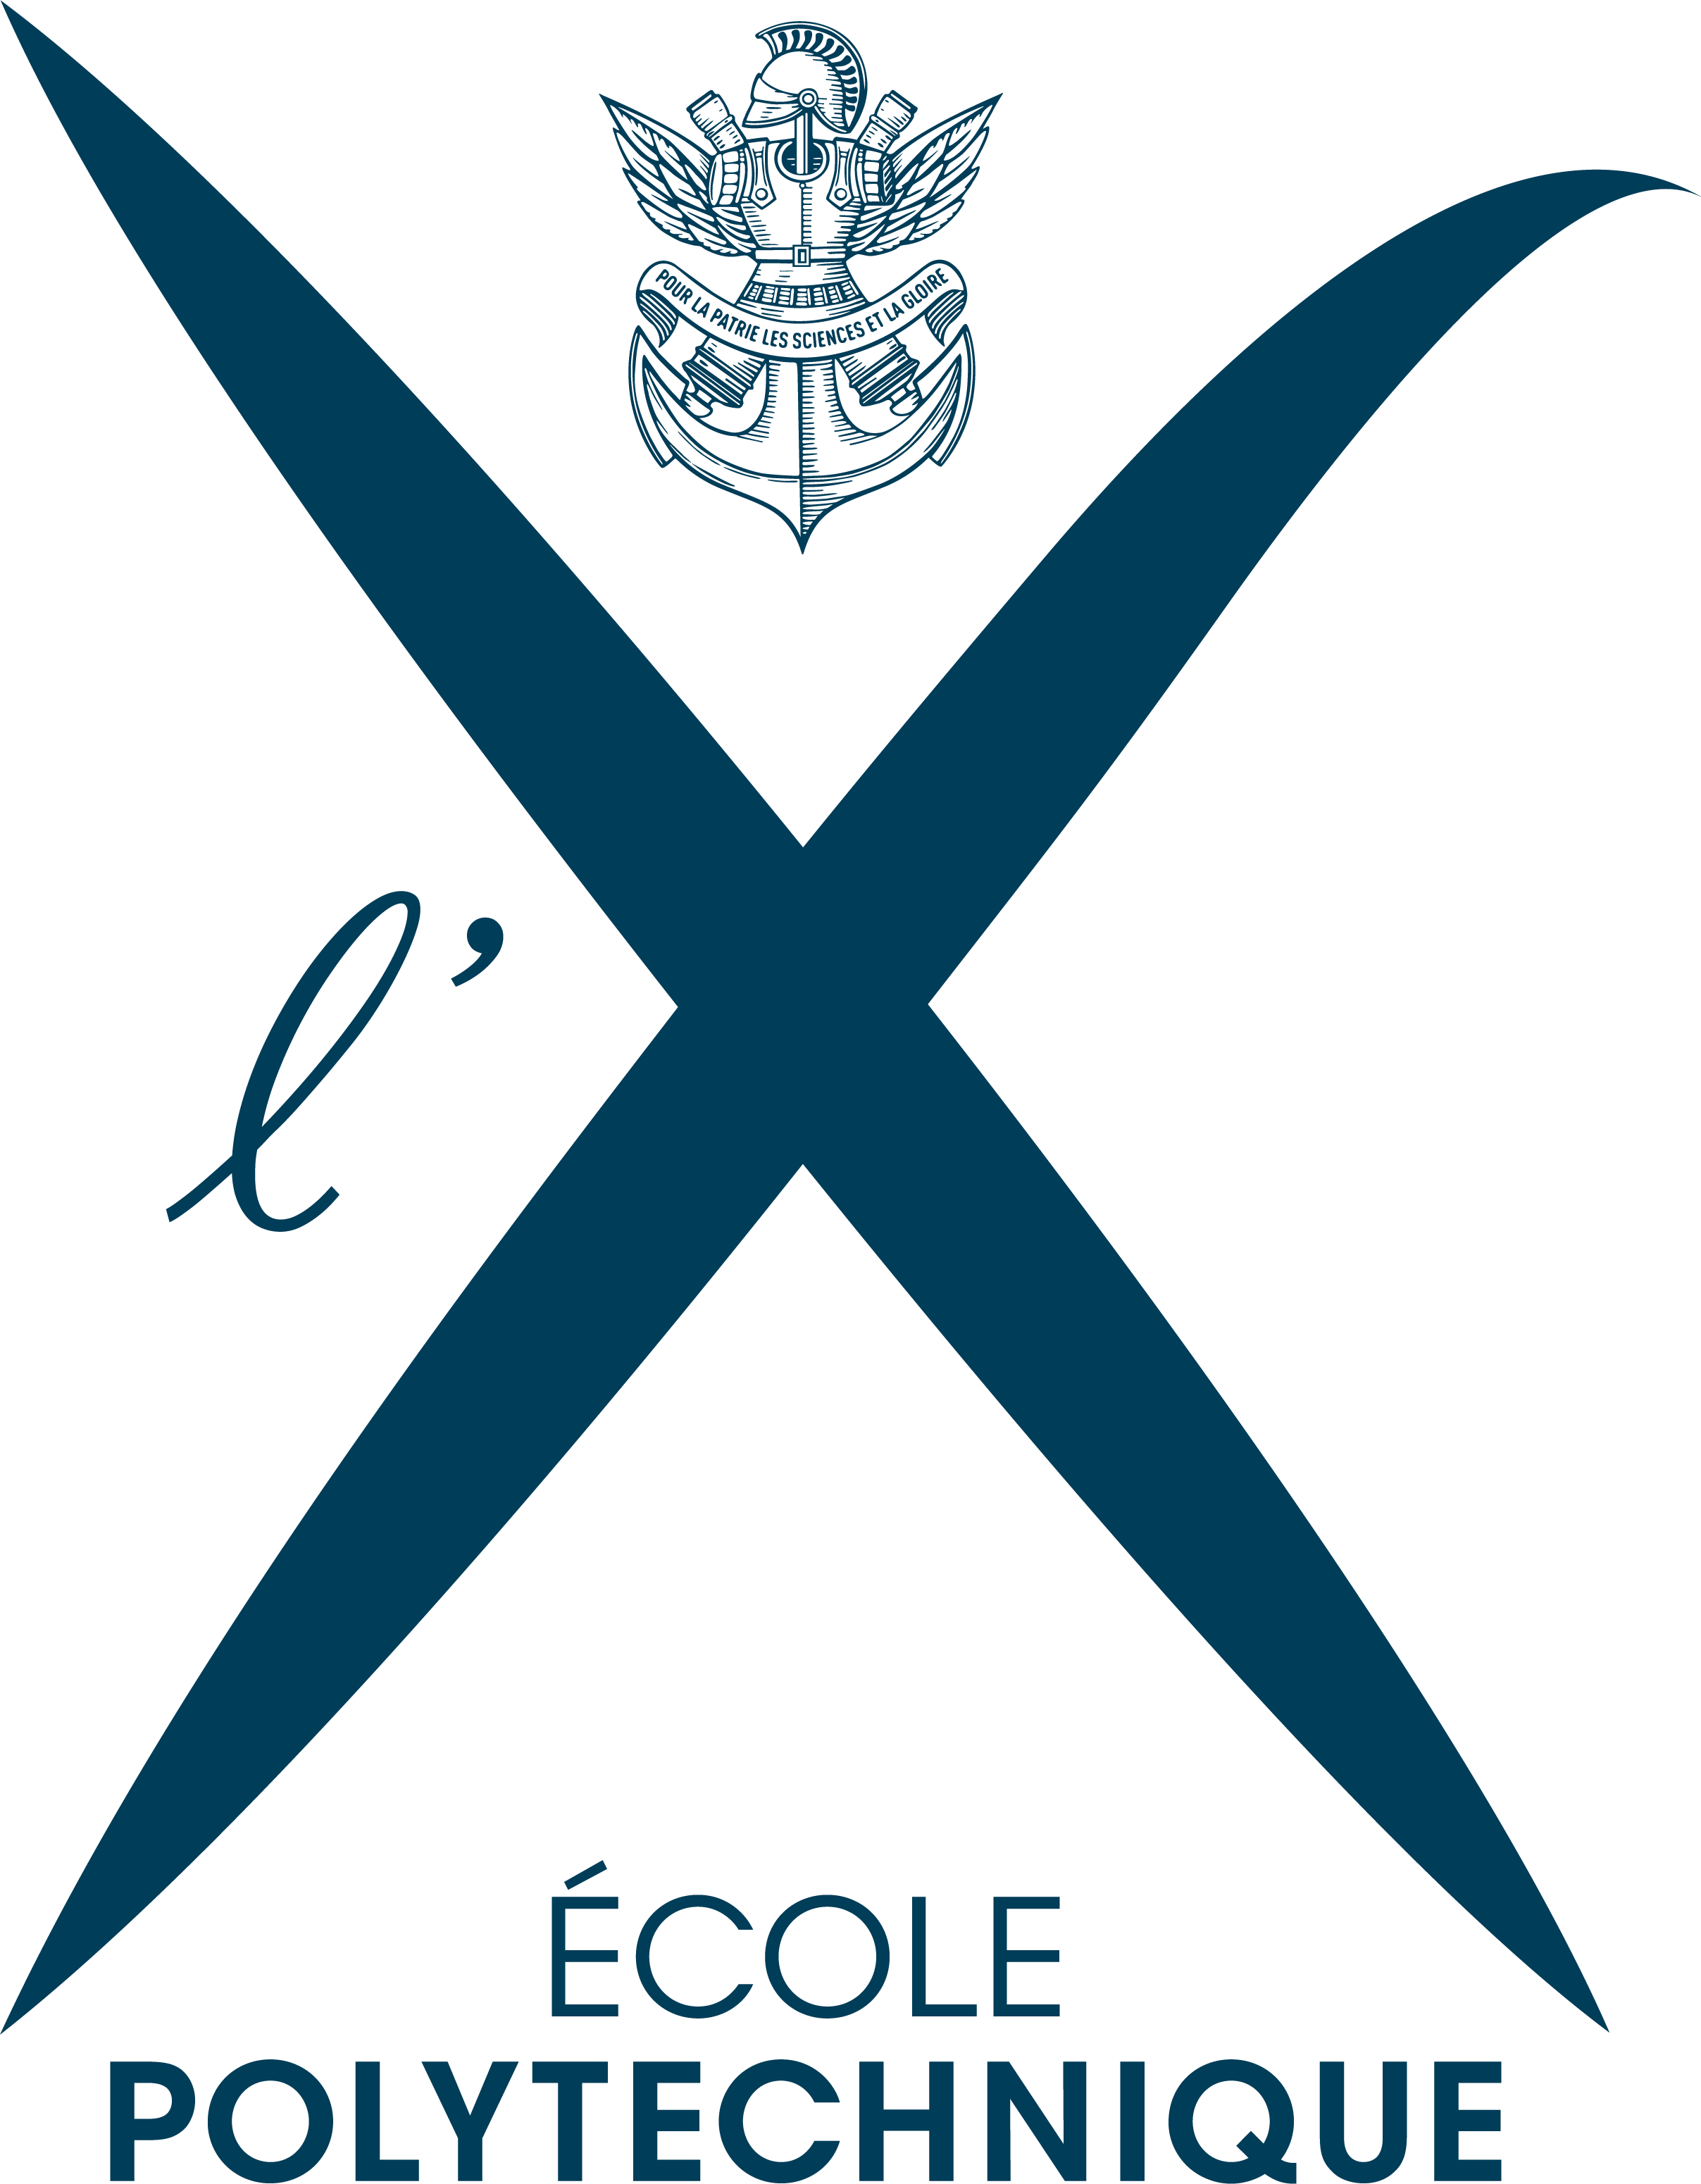 Ecole Polytechnique logo.